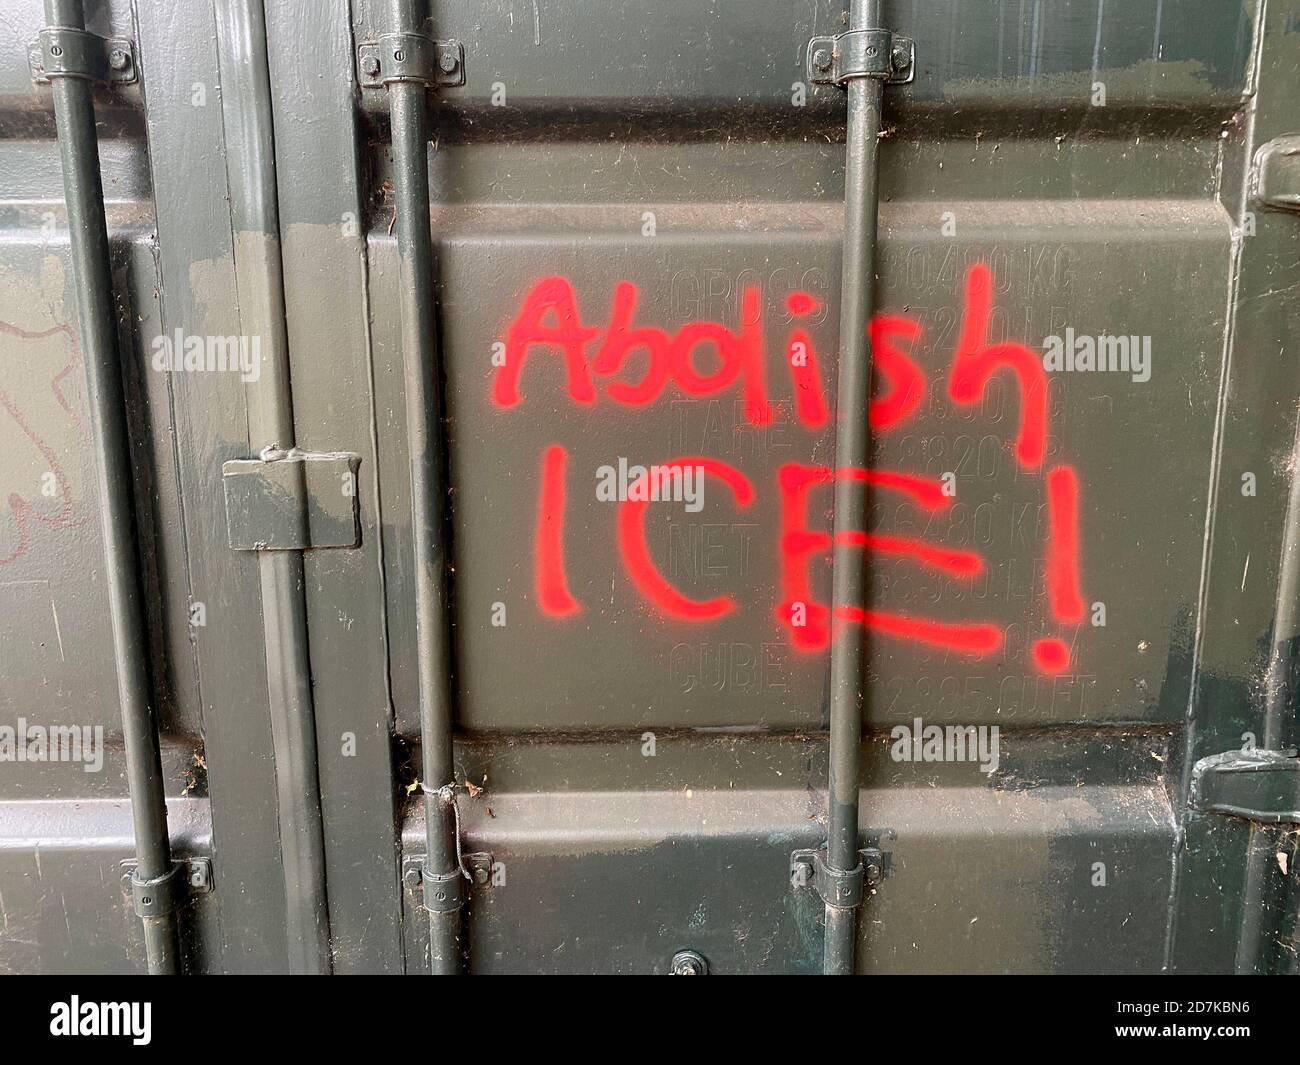 Abolish ICE, spray painted on a door in Prospect Park, Brooklyn, New York. Stock Photo